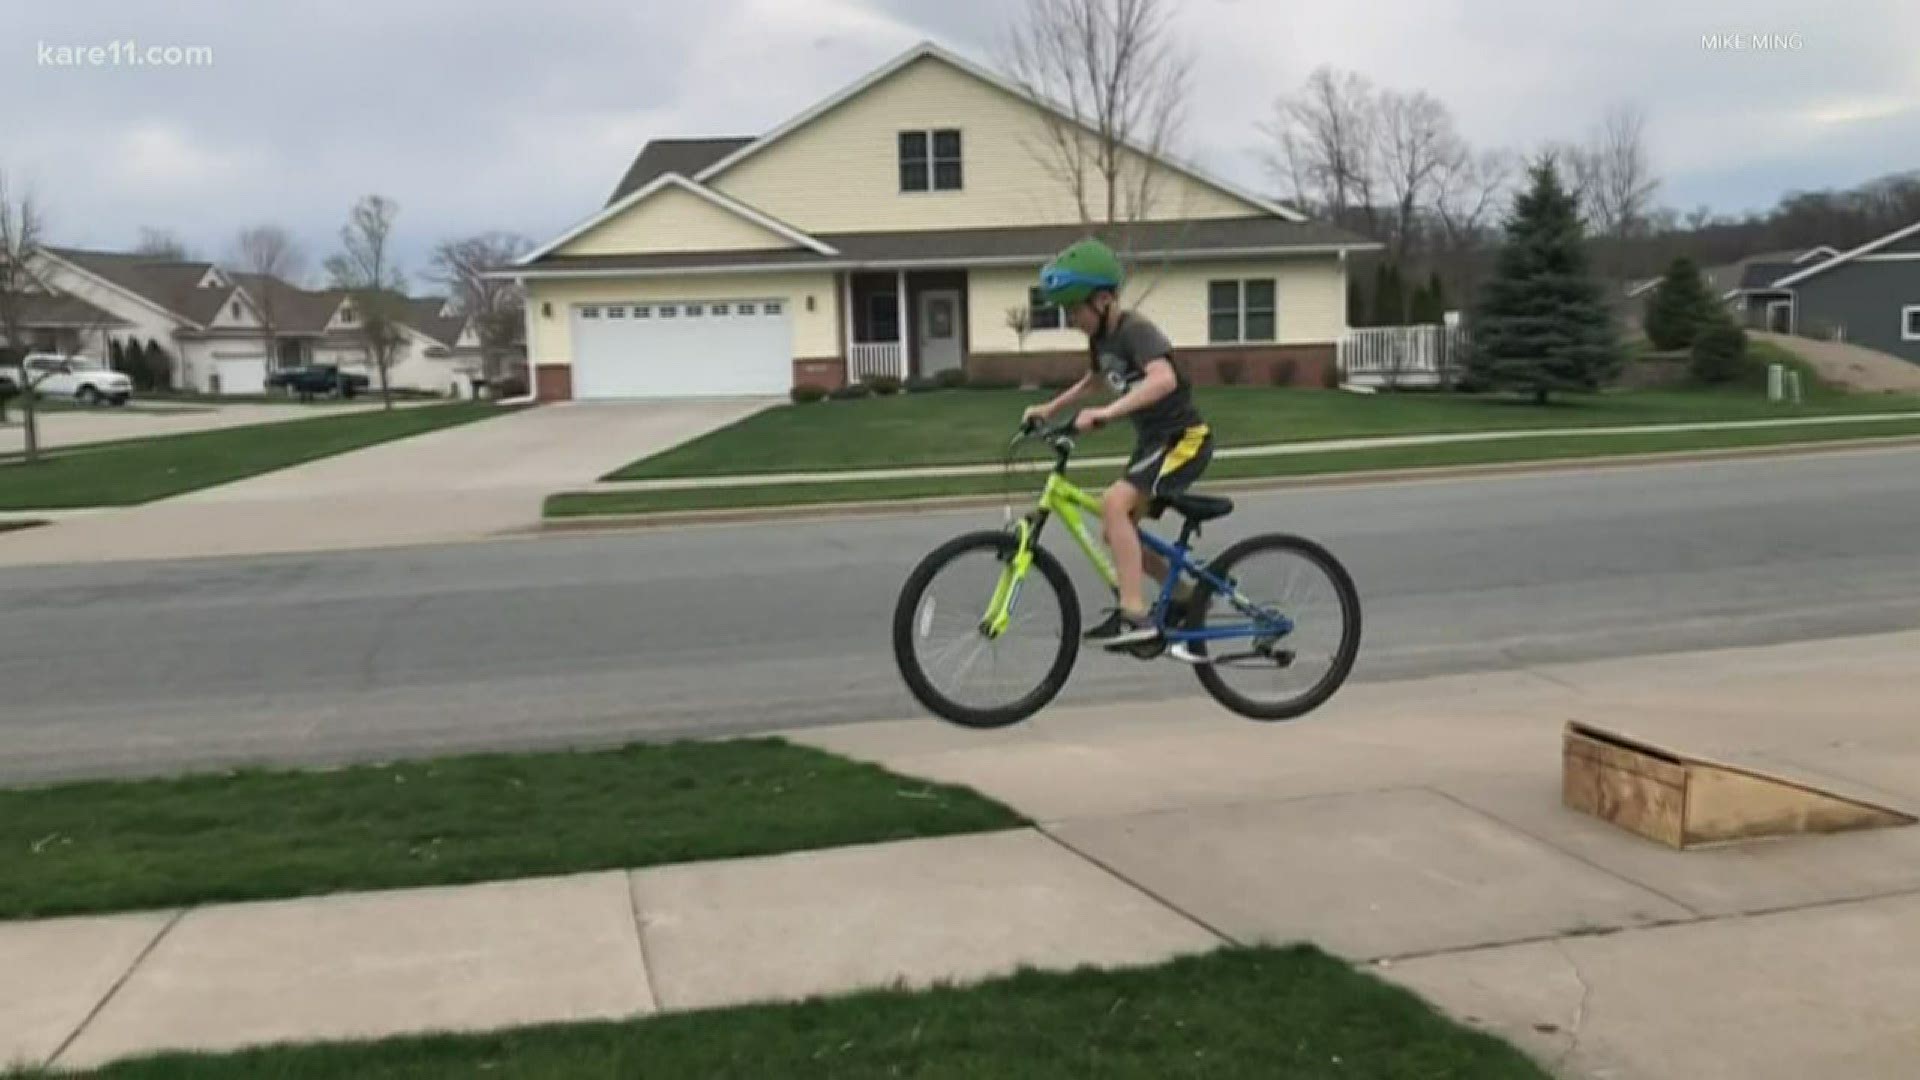 Wisconsin boy tries out new bike ramp | kare11.com